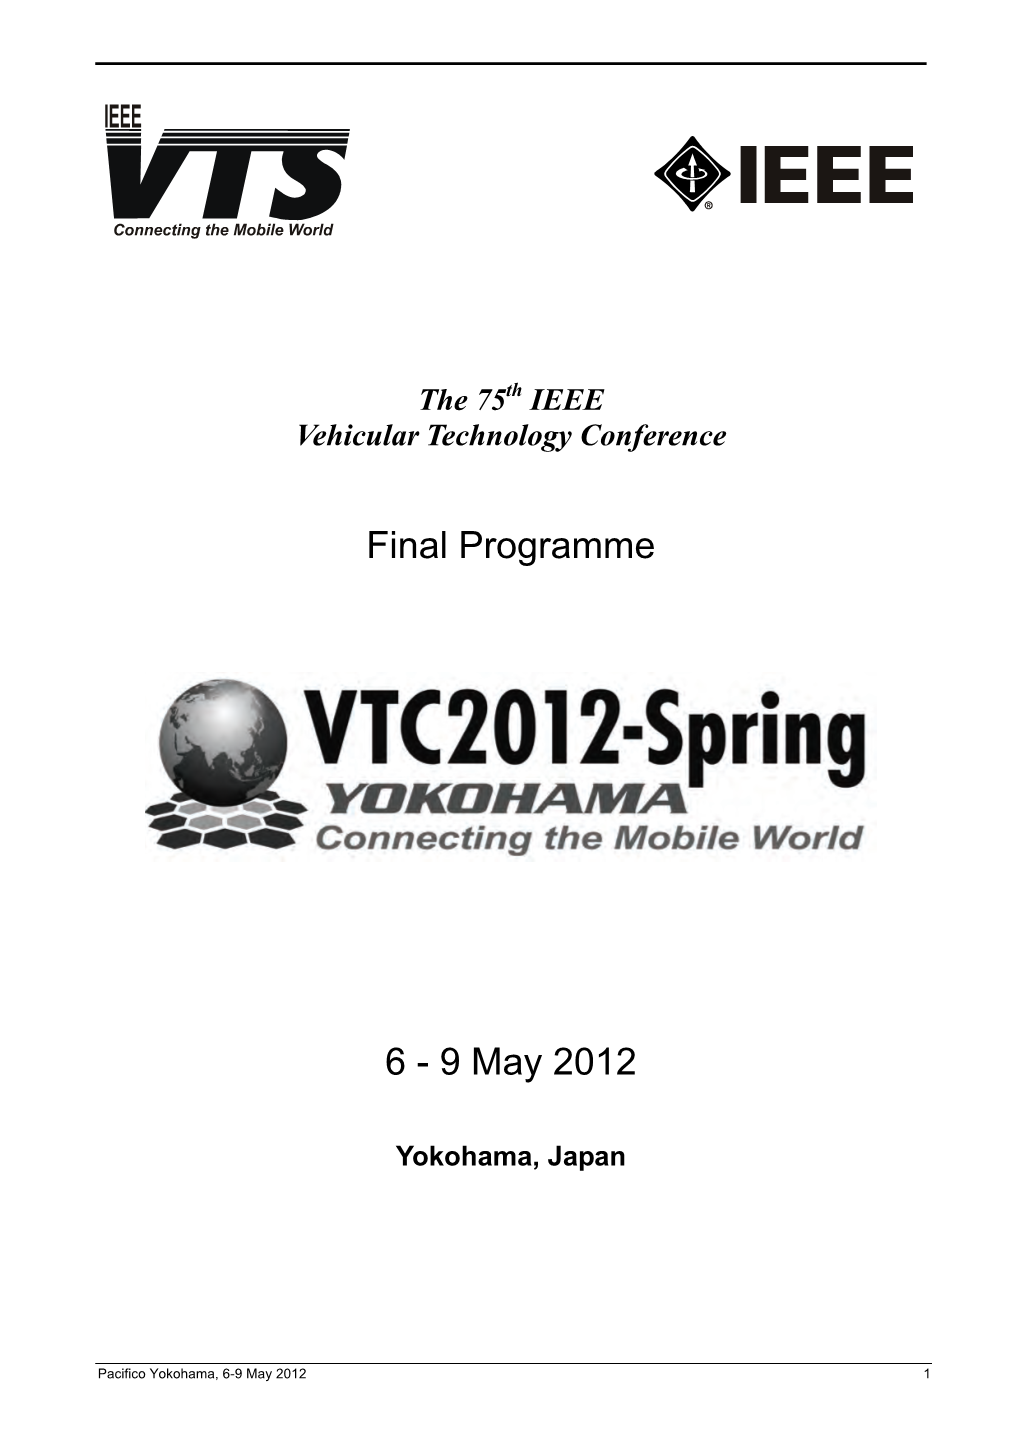 VTC2012-Spring Final Program